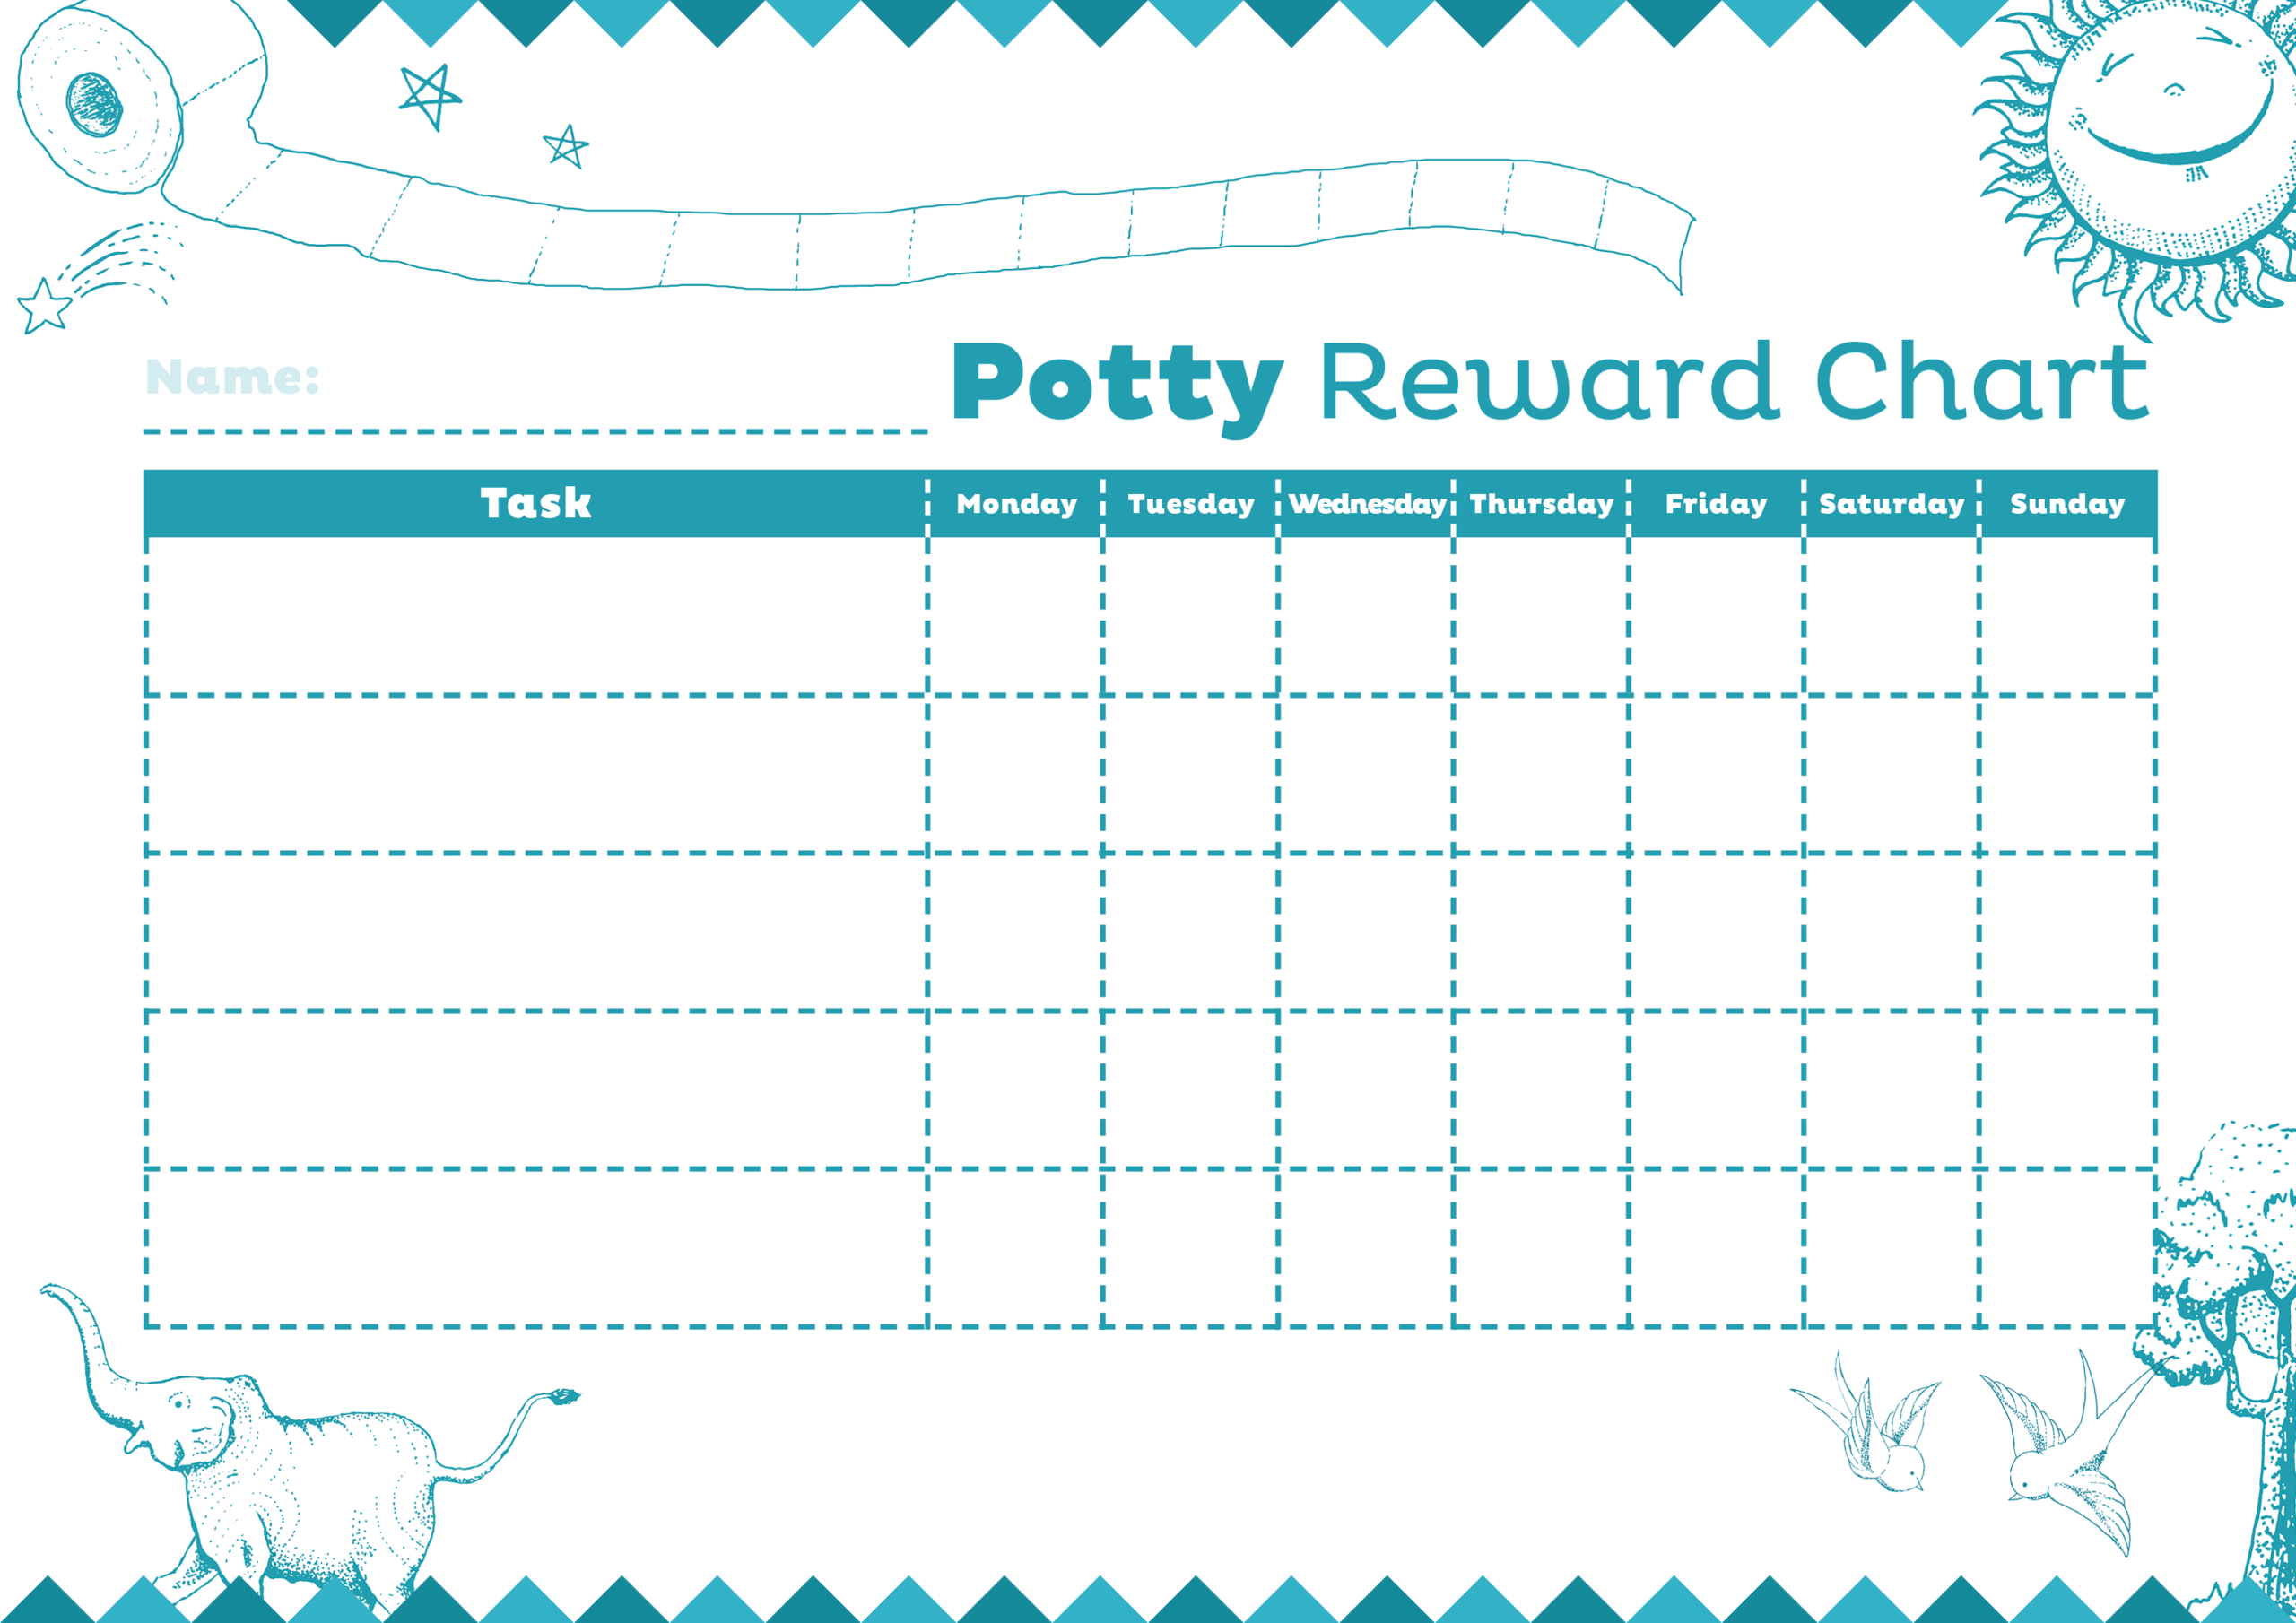 Potty Reward Charts Template | Activity Shelter Throughout Blank Reward Chart Template